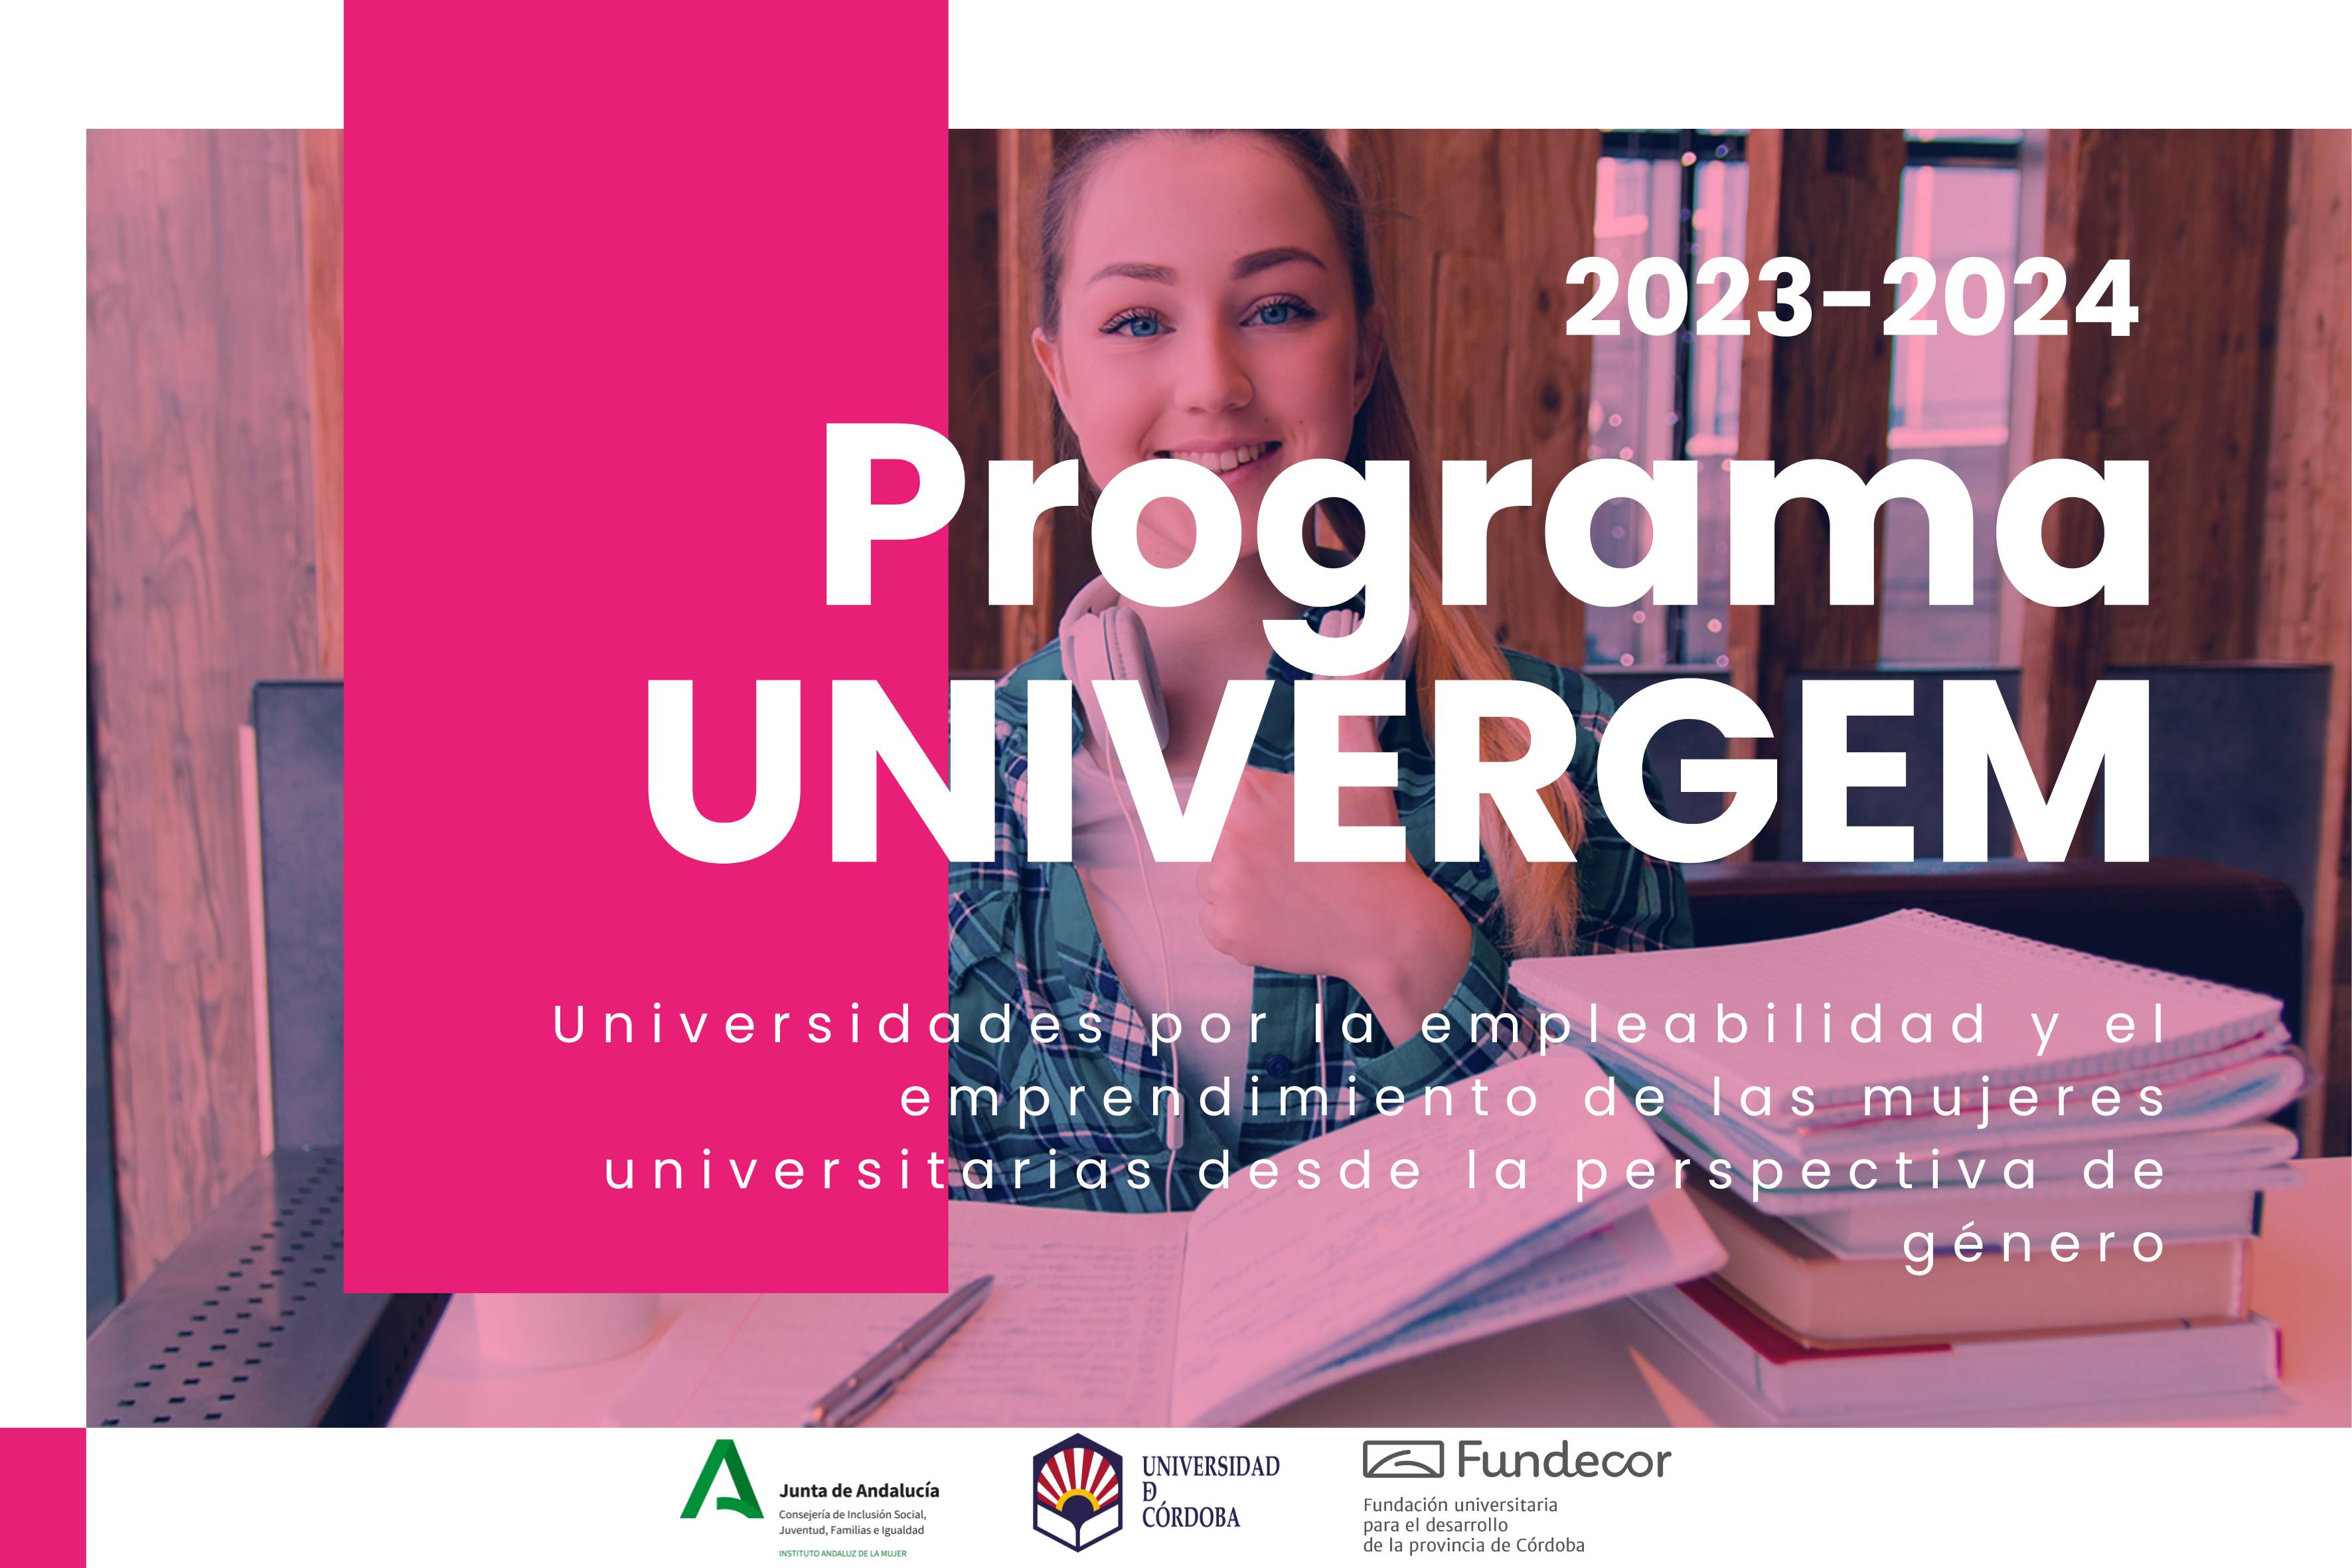 Programa Univergem